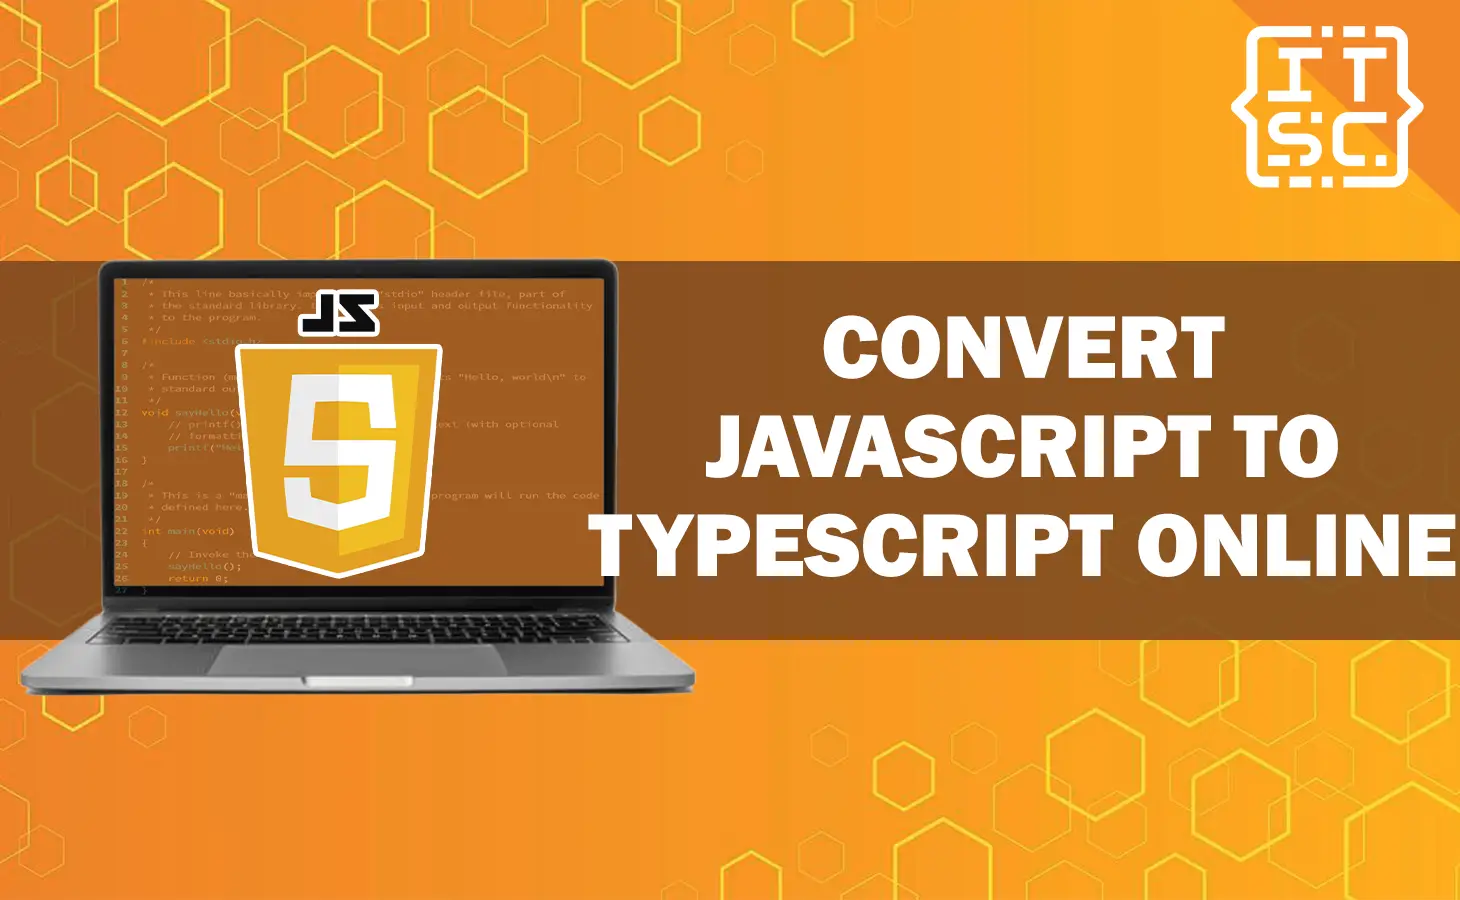 Convert JavaScript to Typescript Online